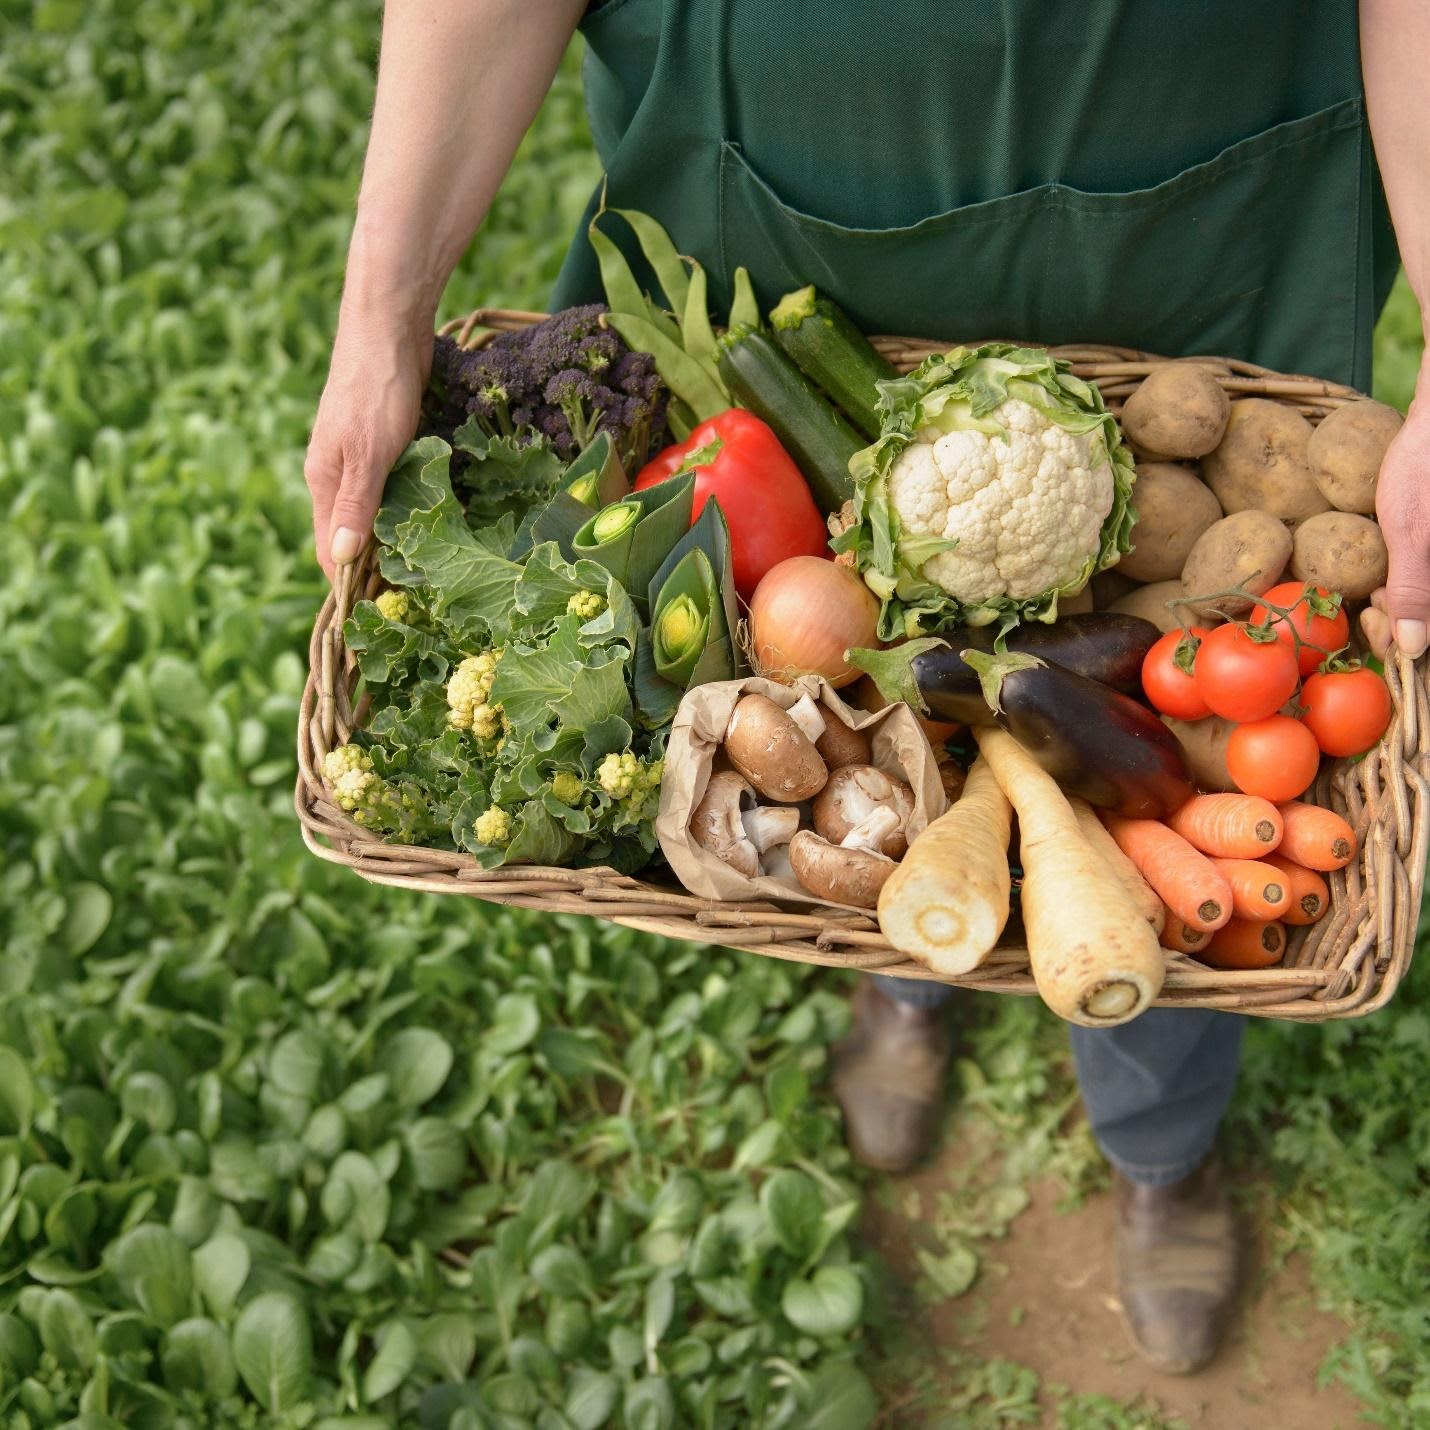 Flourishing Organic Farming Market Poised for Remarkable Growth